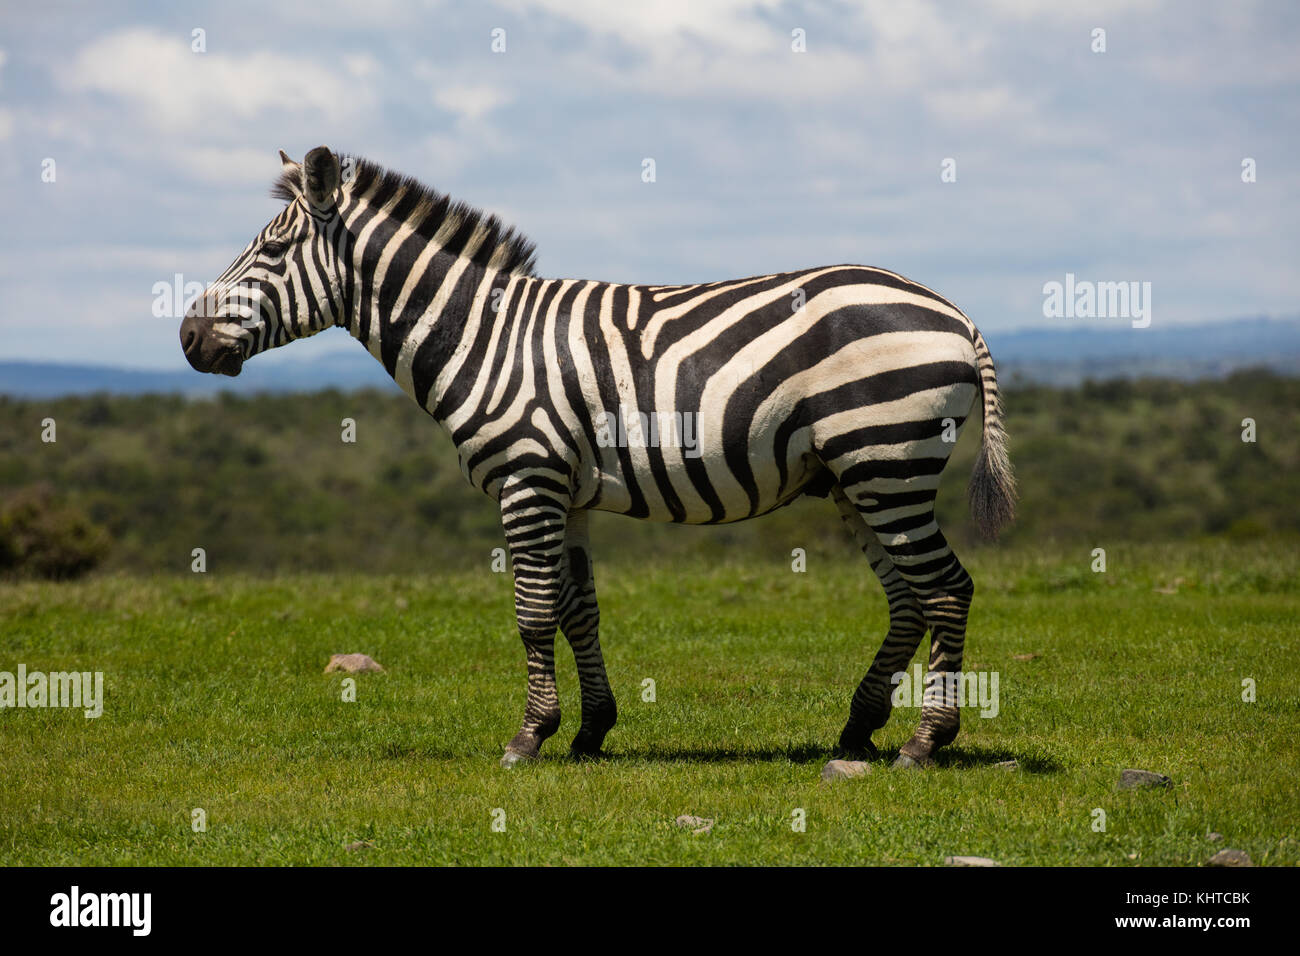 Un macho de llanuras (zebra Equus burchelli) en la sabana de Kenia. Ol Pejeta Conservancy, Laikipia, Kenya. Foto de stock